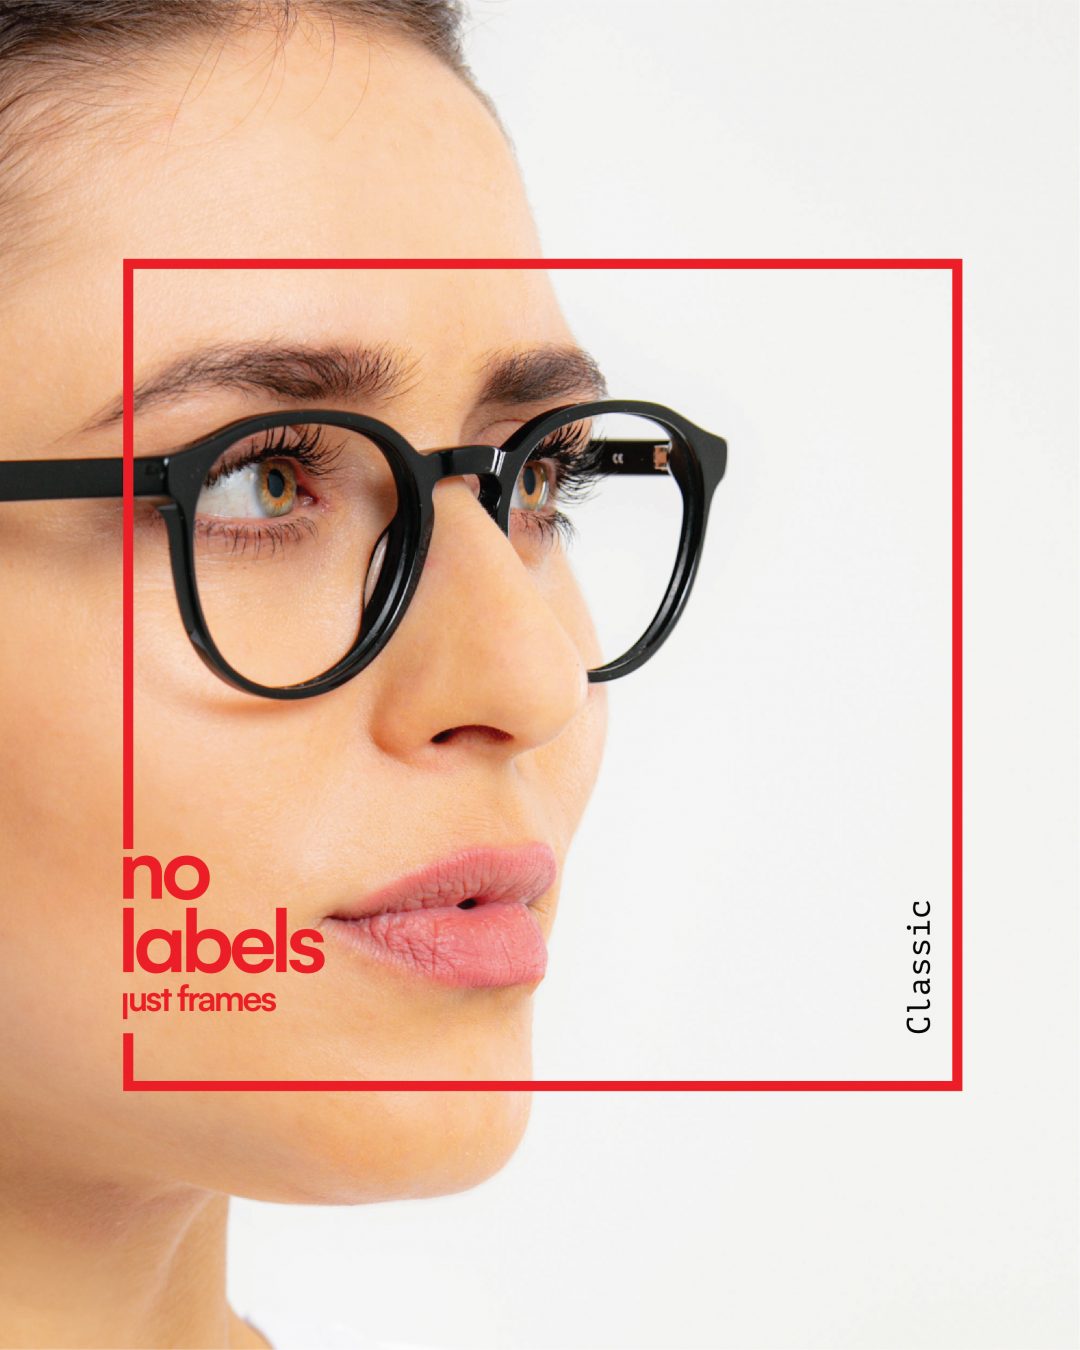 No-labels-just-frames-07